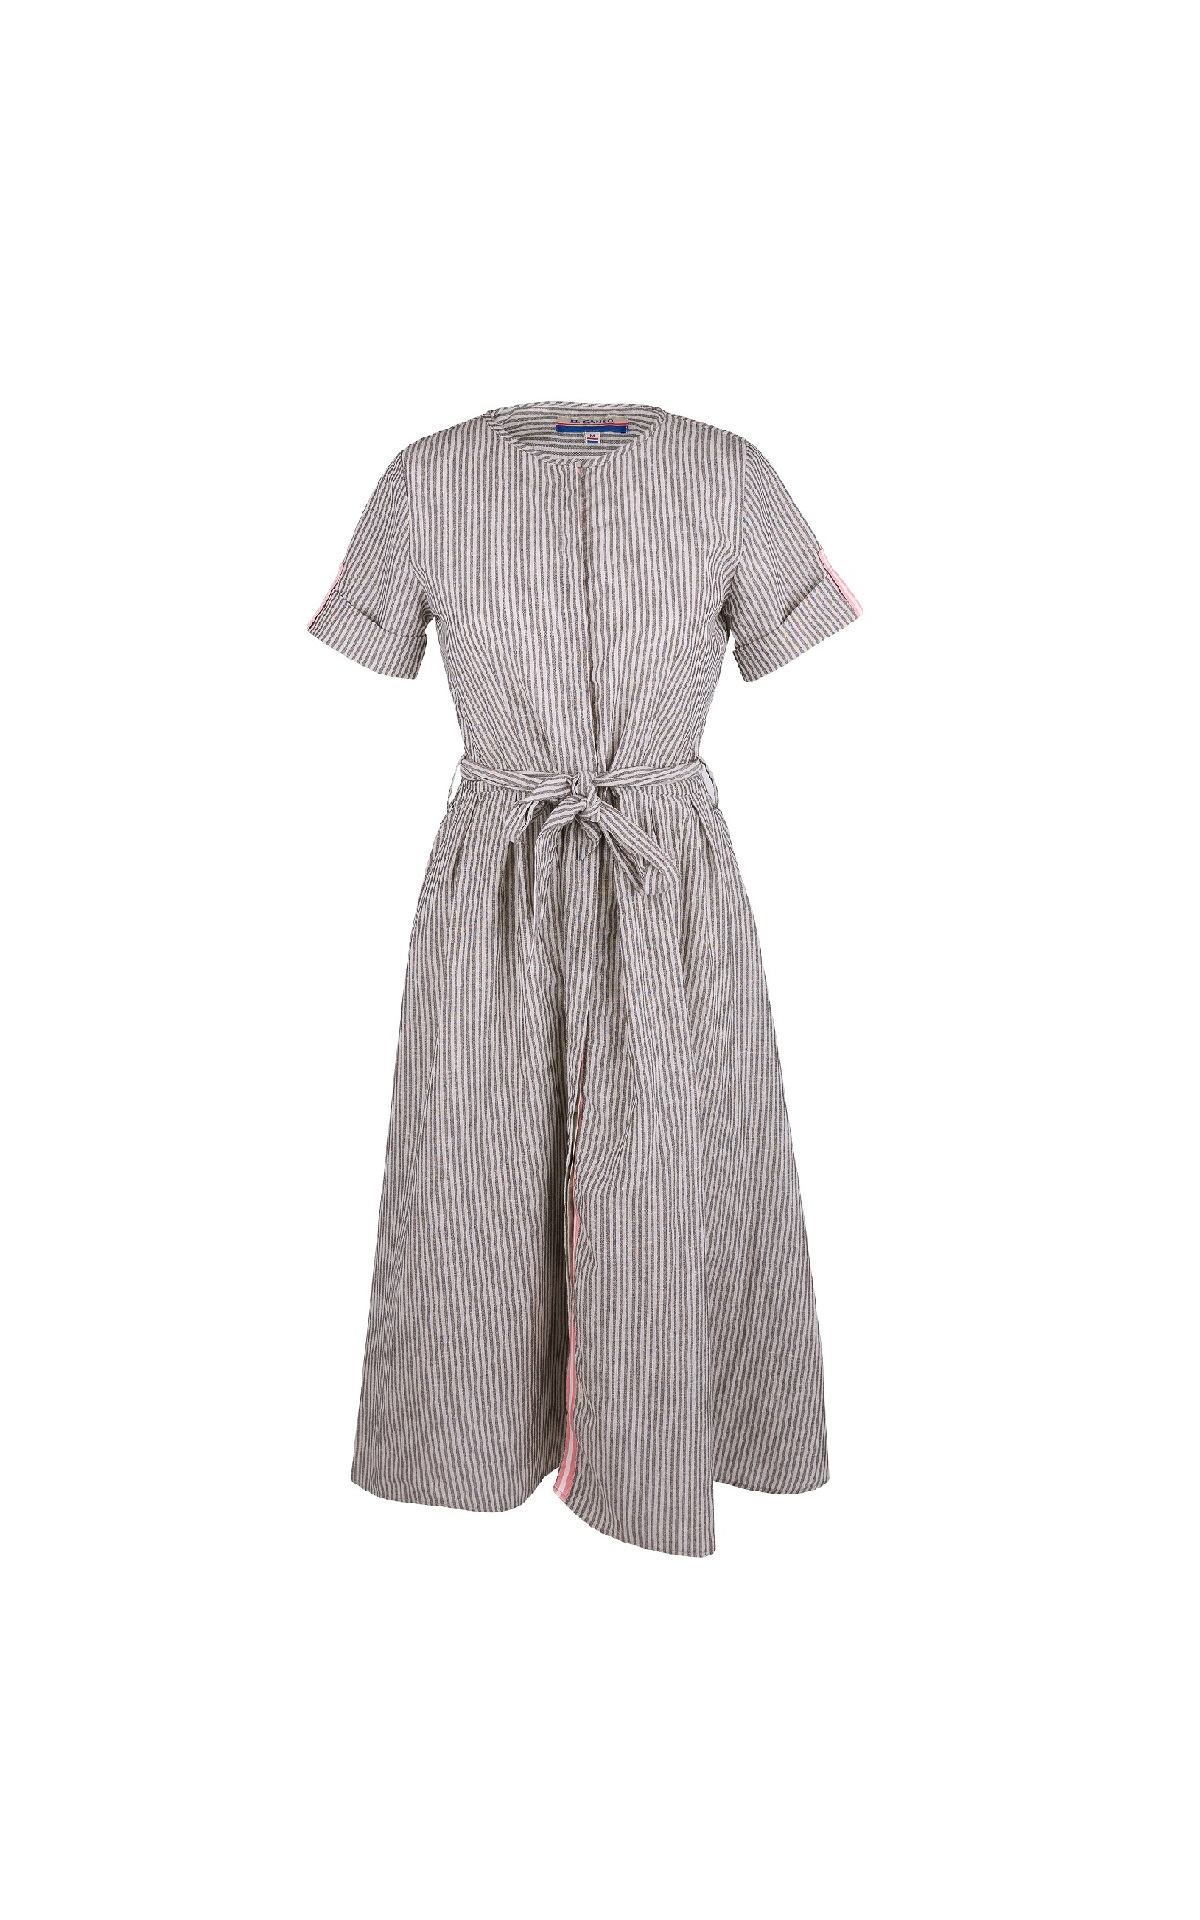 Grey striped dress from El Ganso